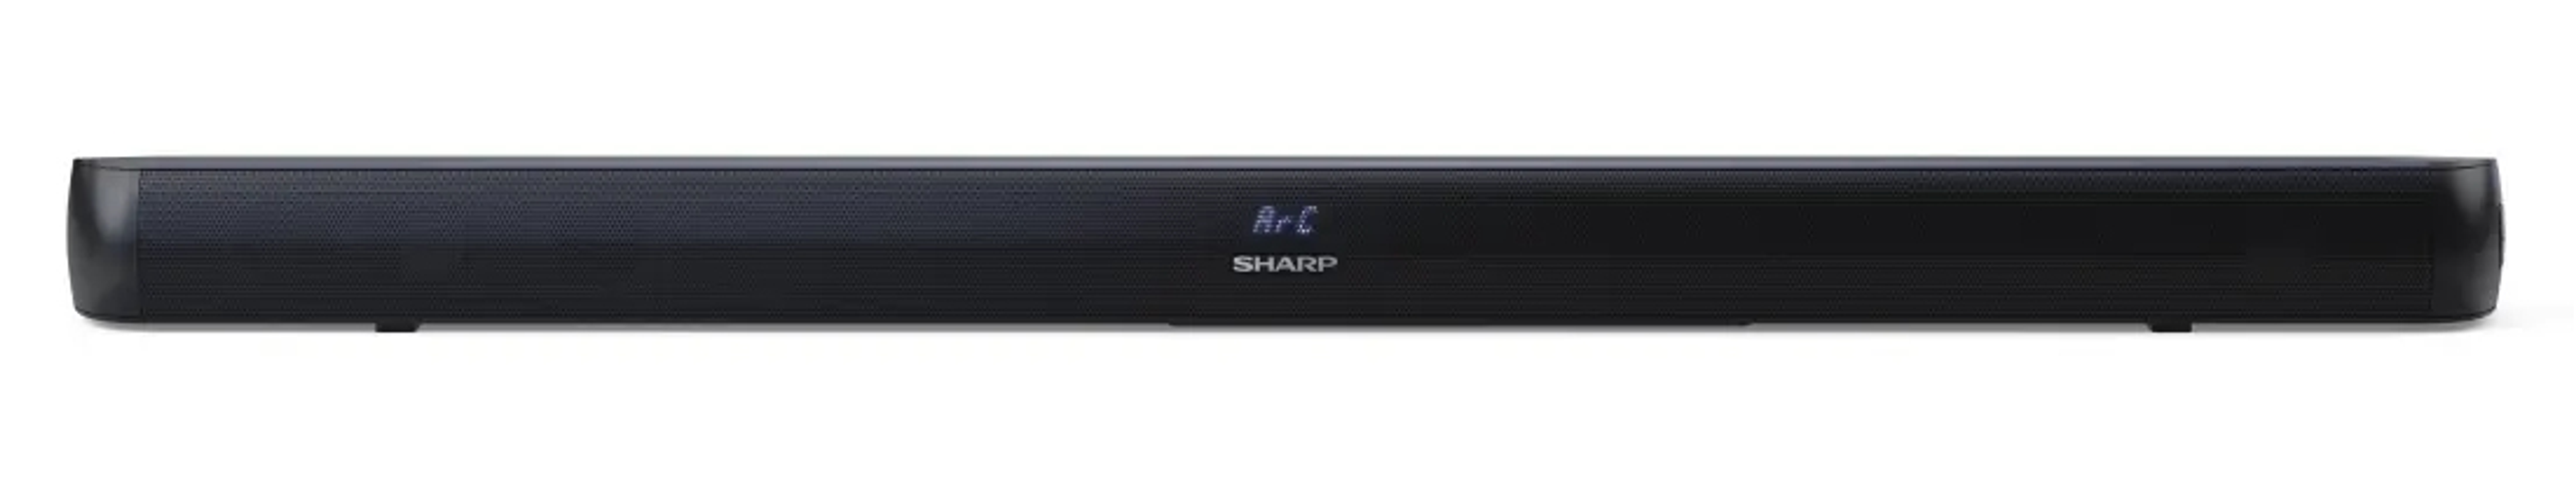 SHARP HT-SB147 schwarz, Soundbar, schwarz